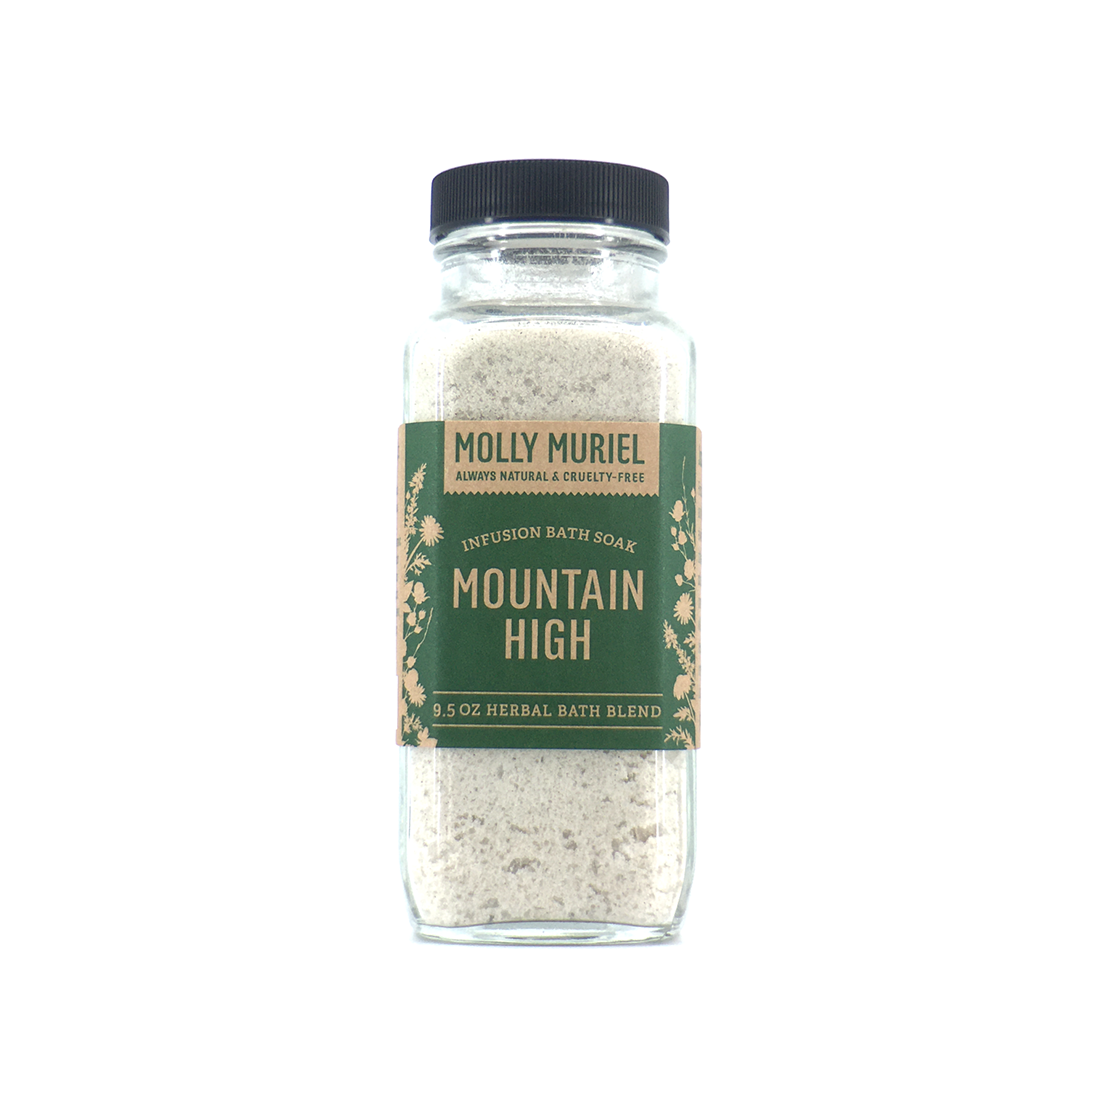 MOUNTAIN HIGH (INVIGORATING BLEND) BATH SOAK – 9.5OZ